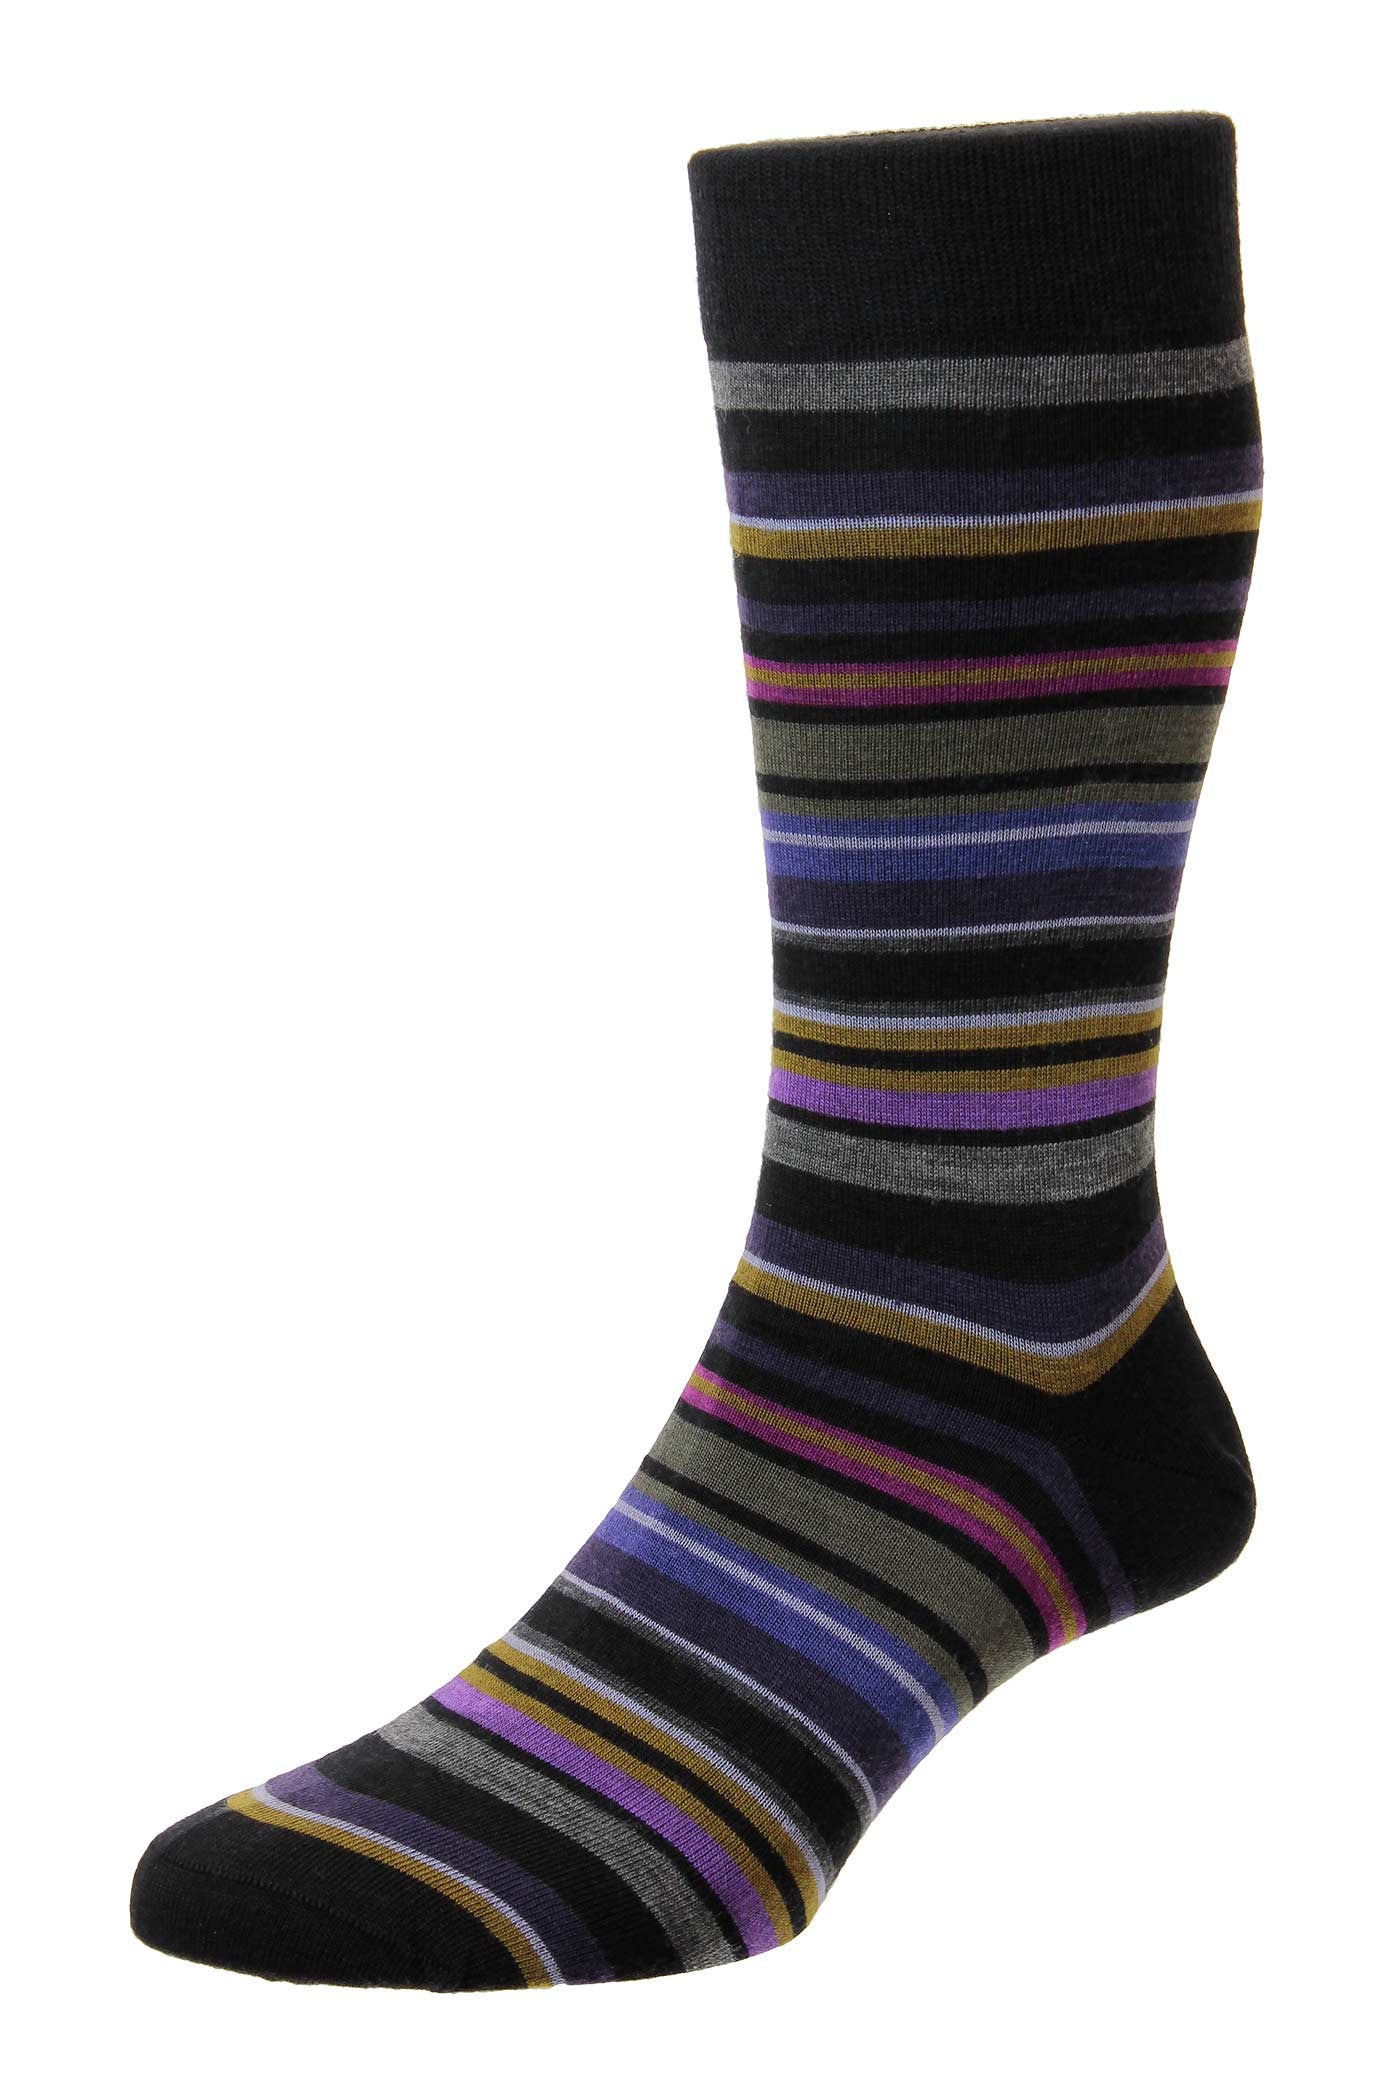 Quakers All Over Stripe Merino Socks